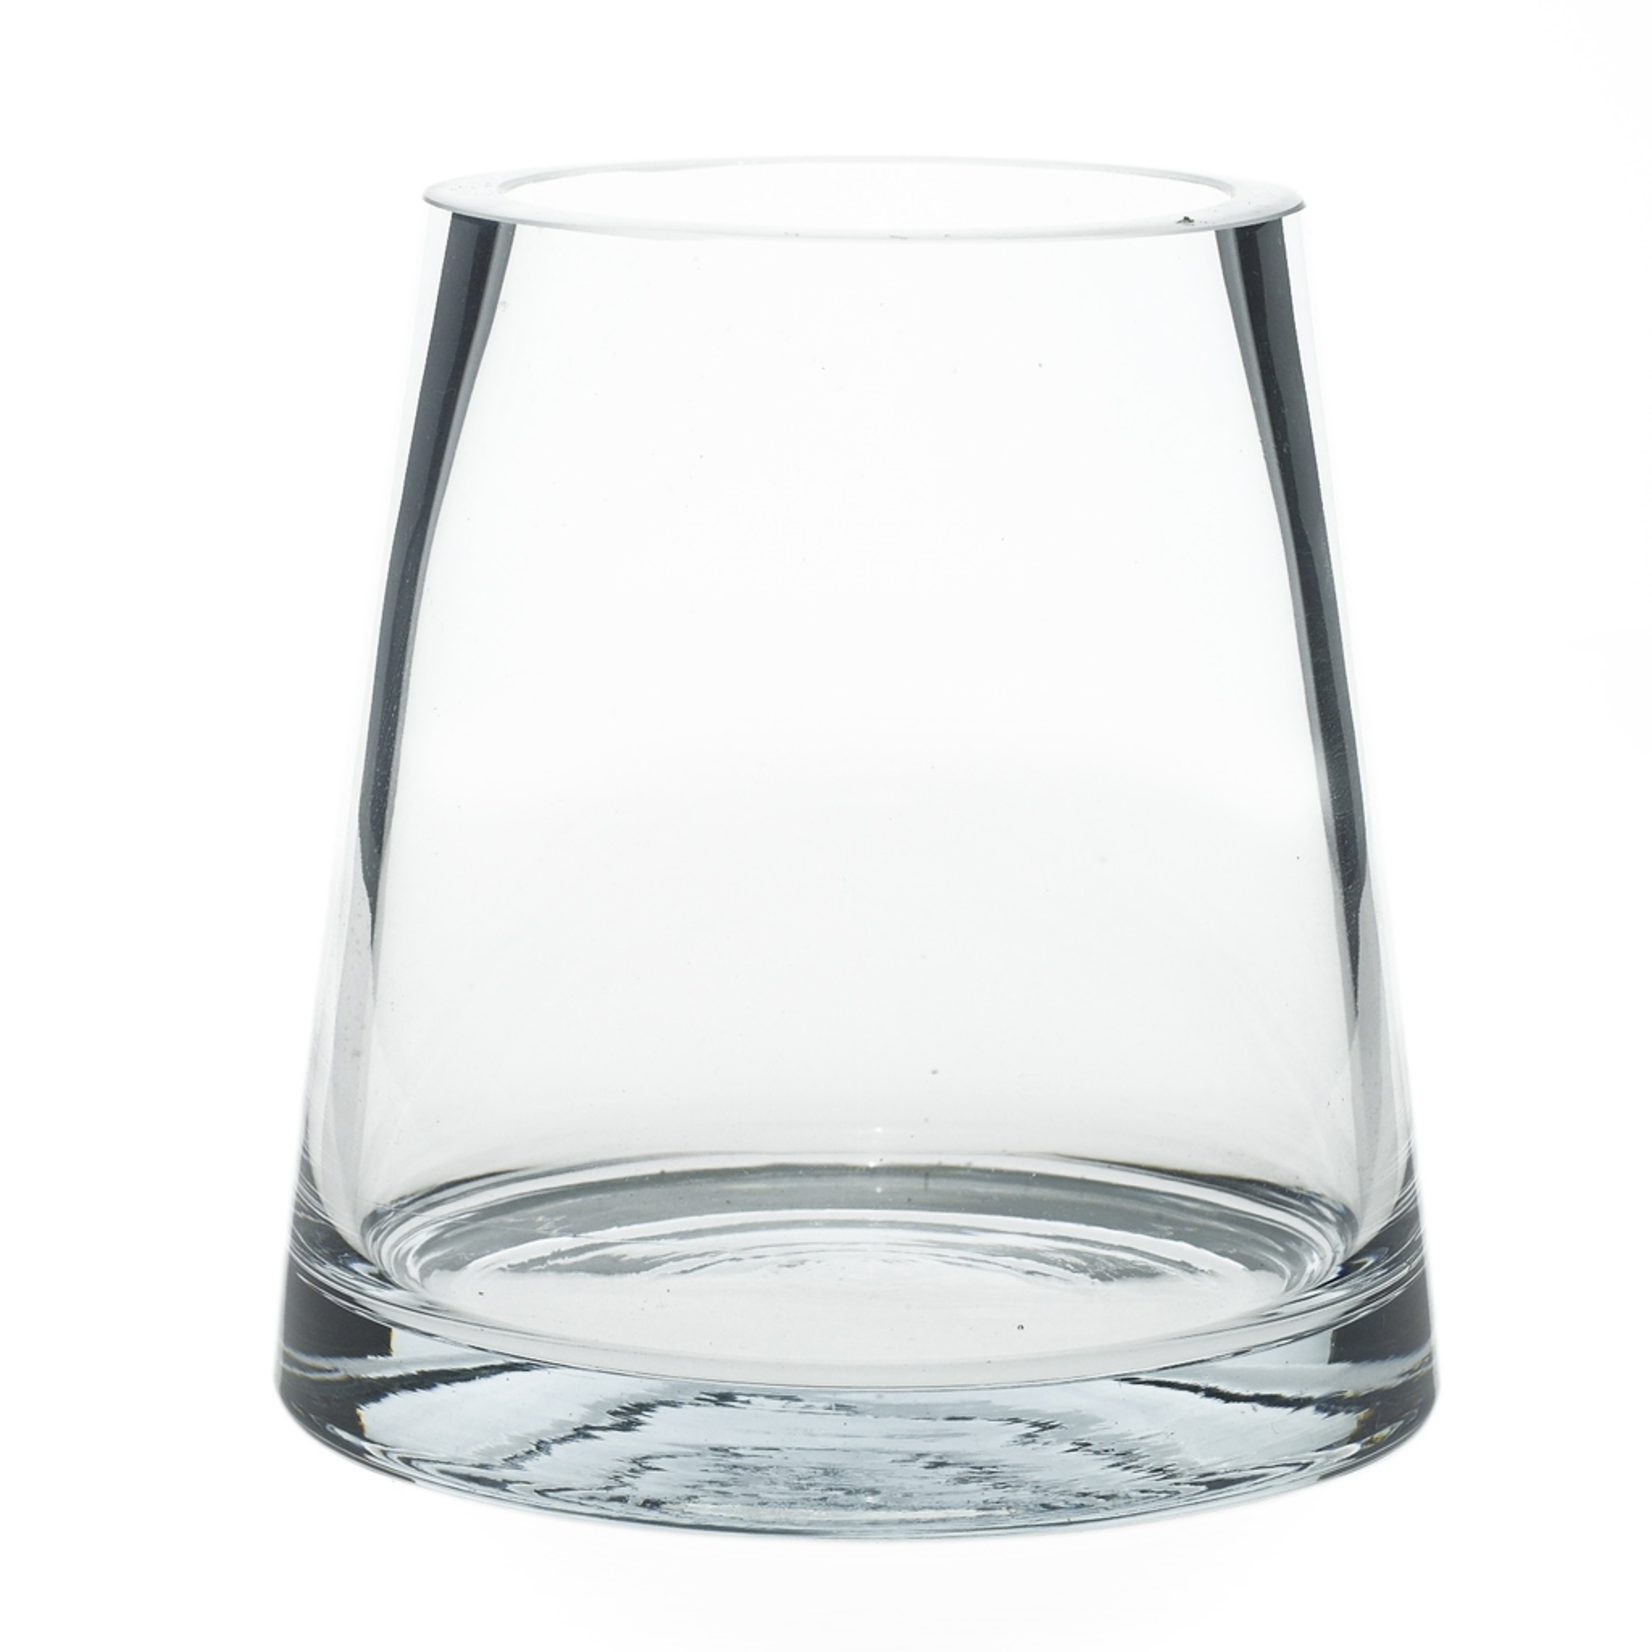 6”h x 5.7” CLEAR GLASS FAT PYRAMID VASE (AD)